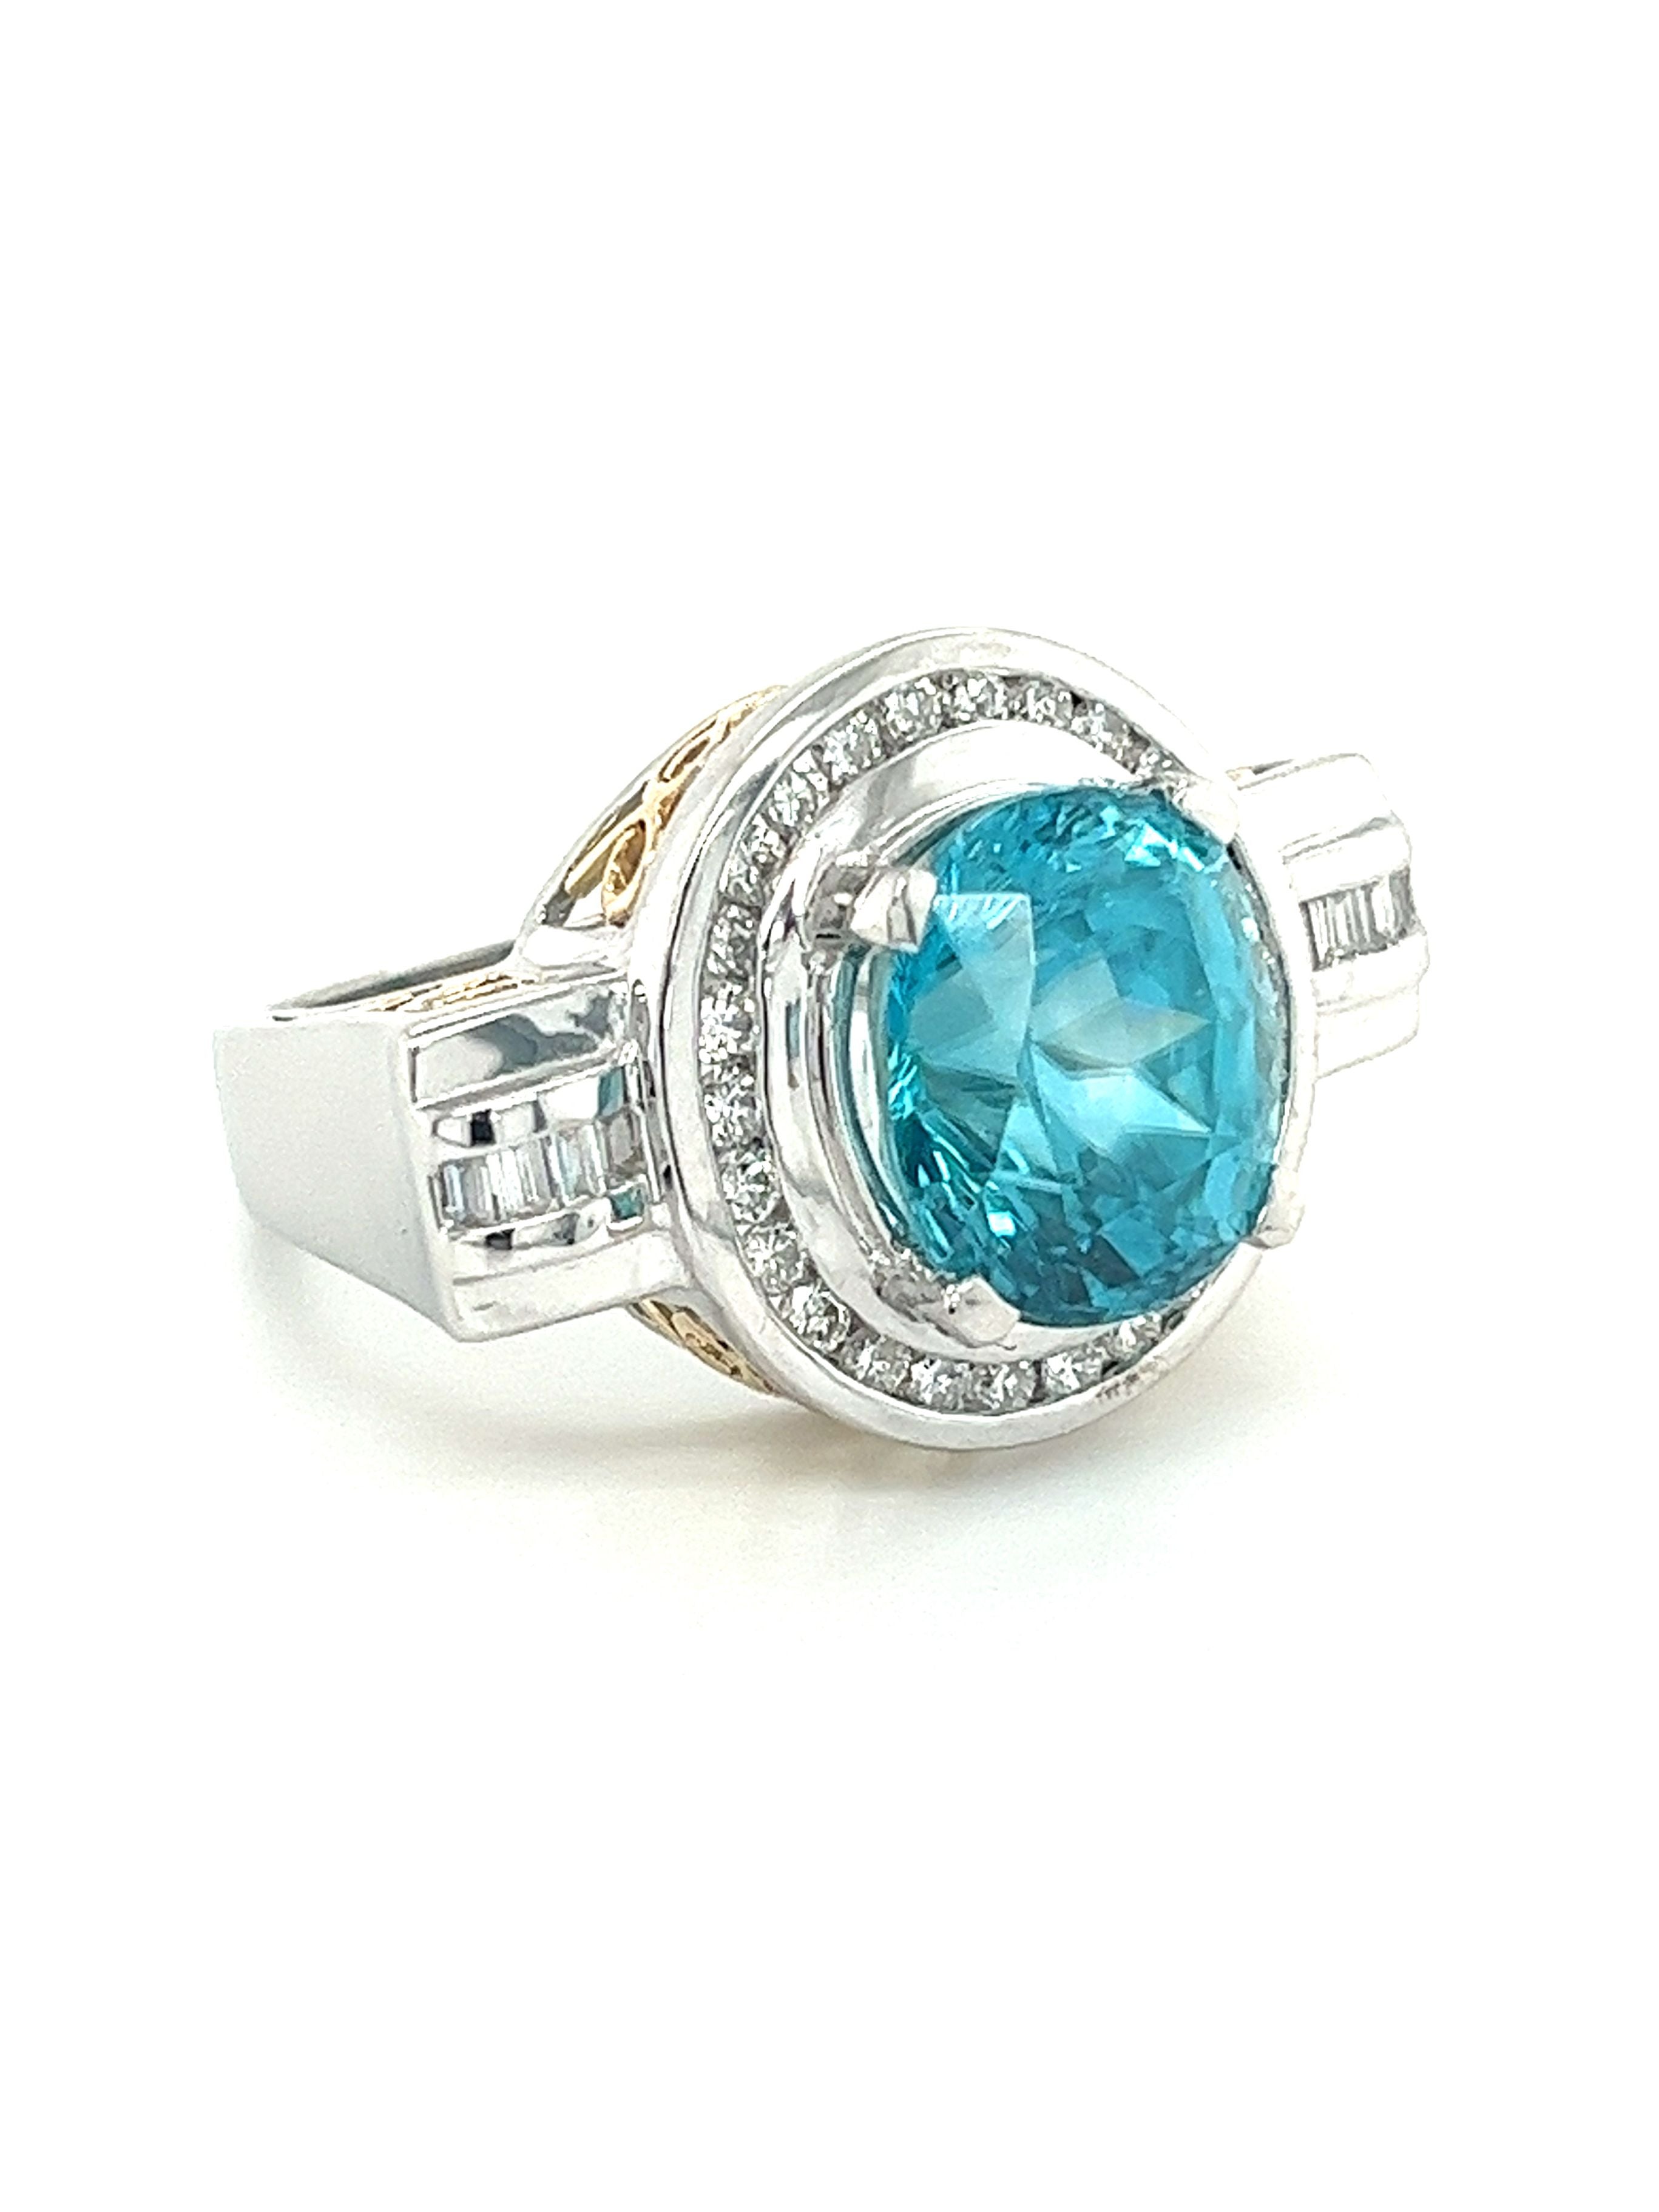 Vintage-Retro-Style-8-Carat-Oval-Cut-Blue-Zircon-with-Diamond-Halo-in-Platinum-18K-Gold-Filigree-Set-Ring-Semi-Precious-Jewelry-2.jpg